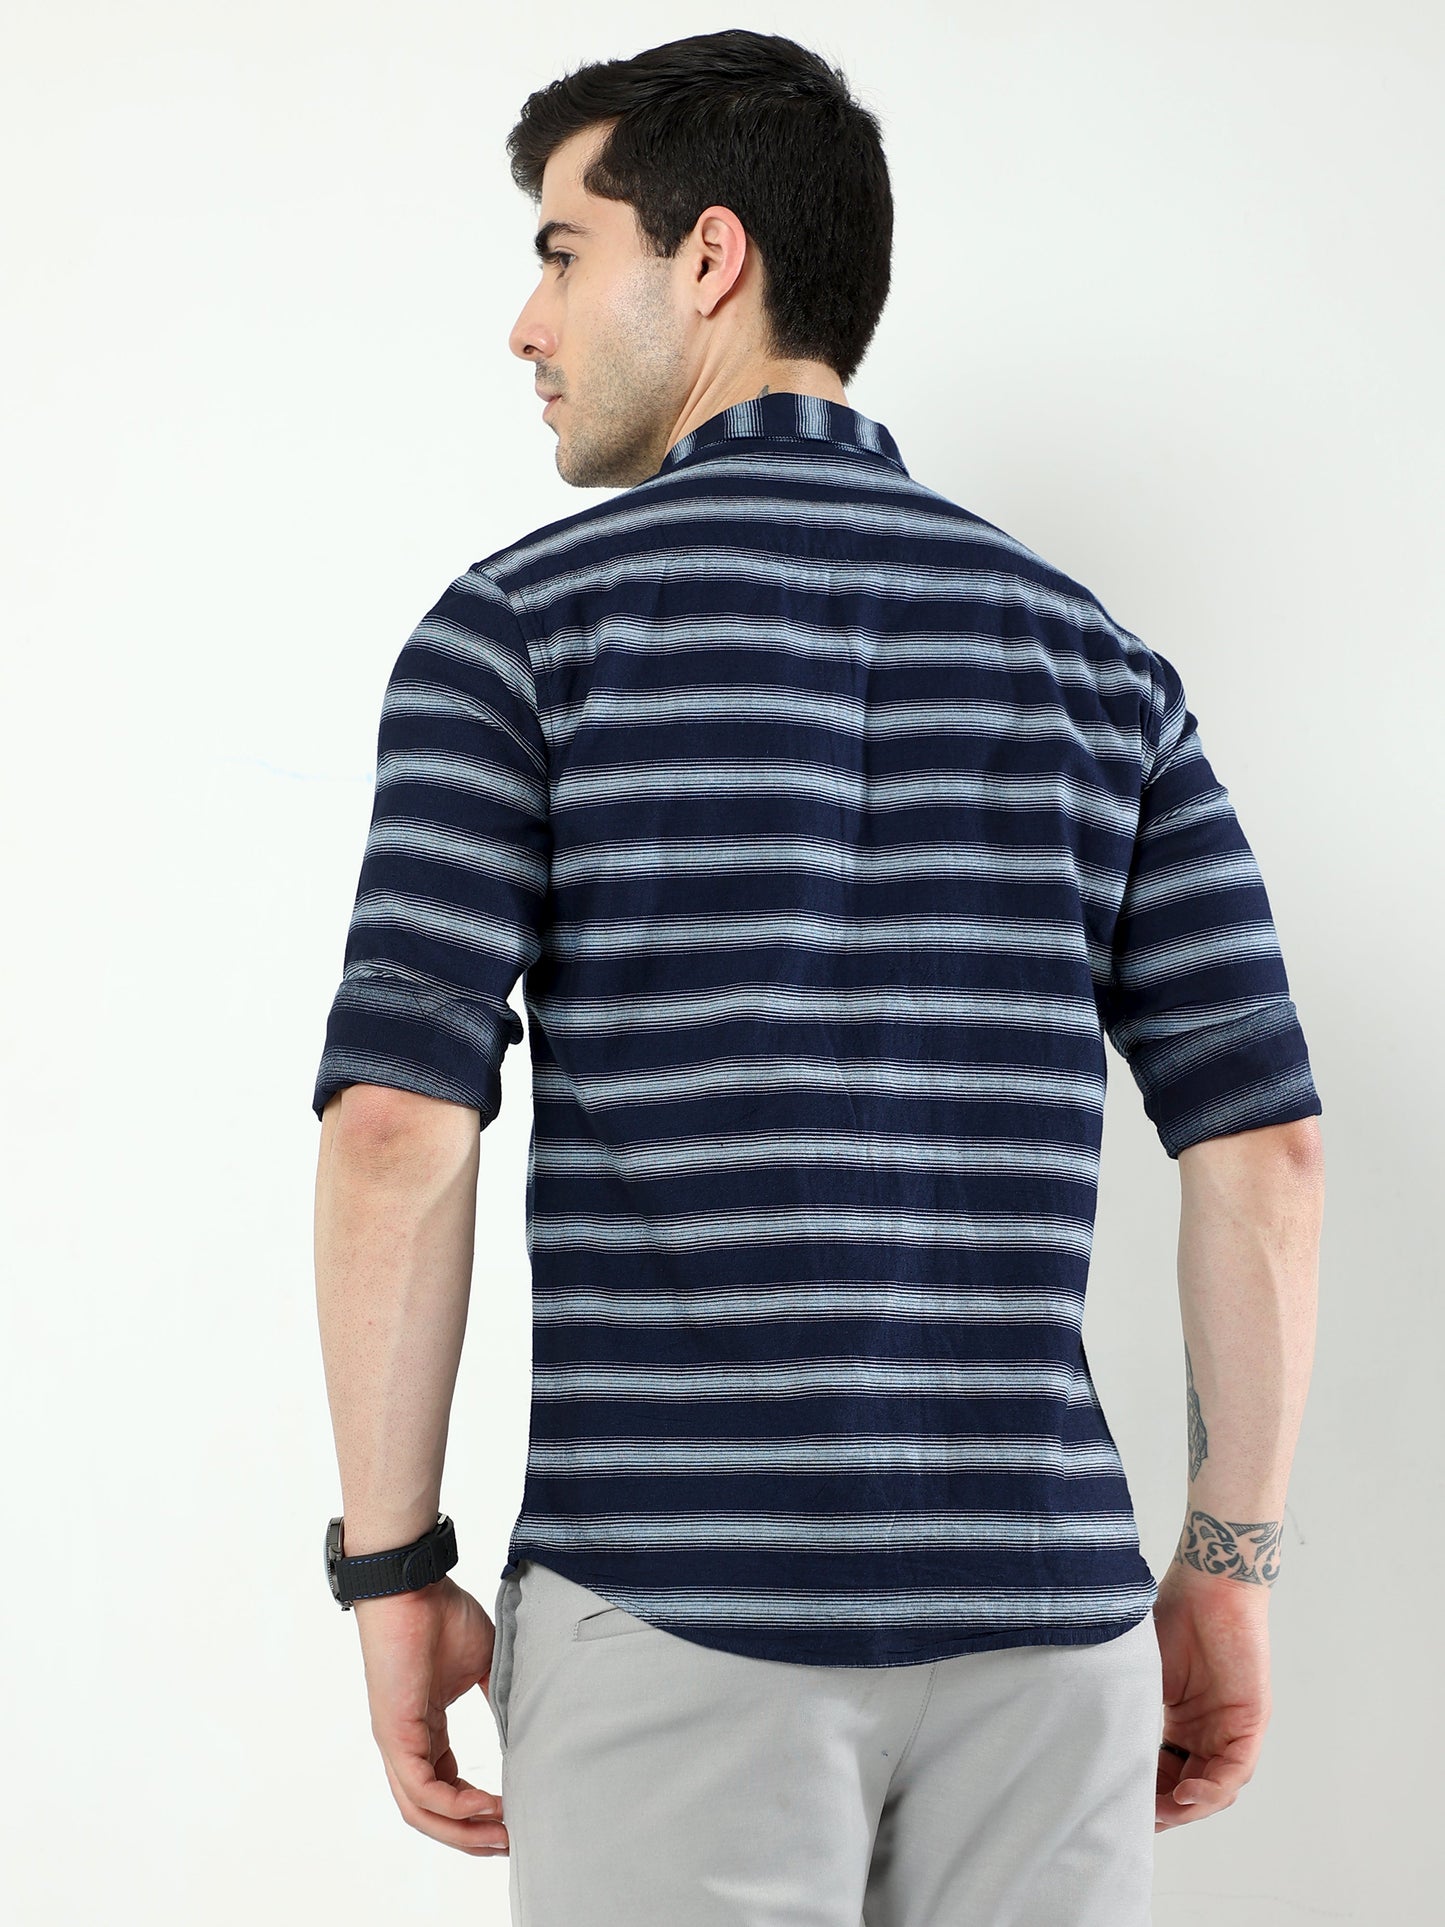 Mirage Blue & Pale Sky Striped Shirt